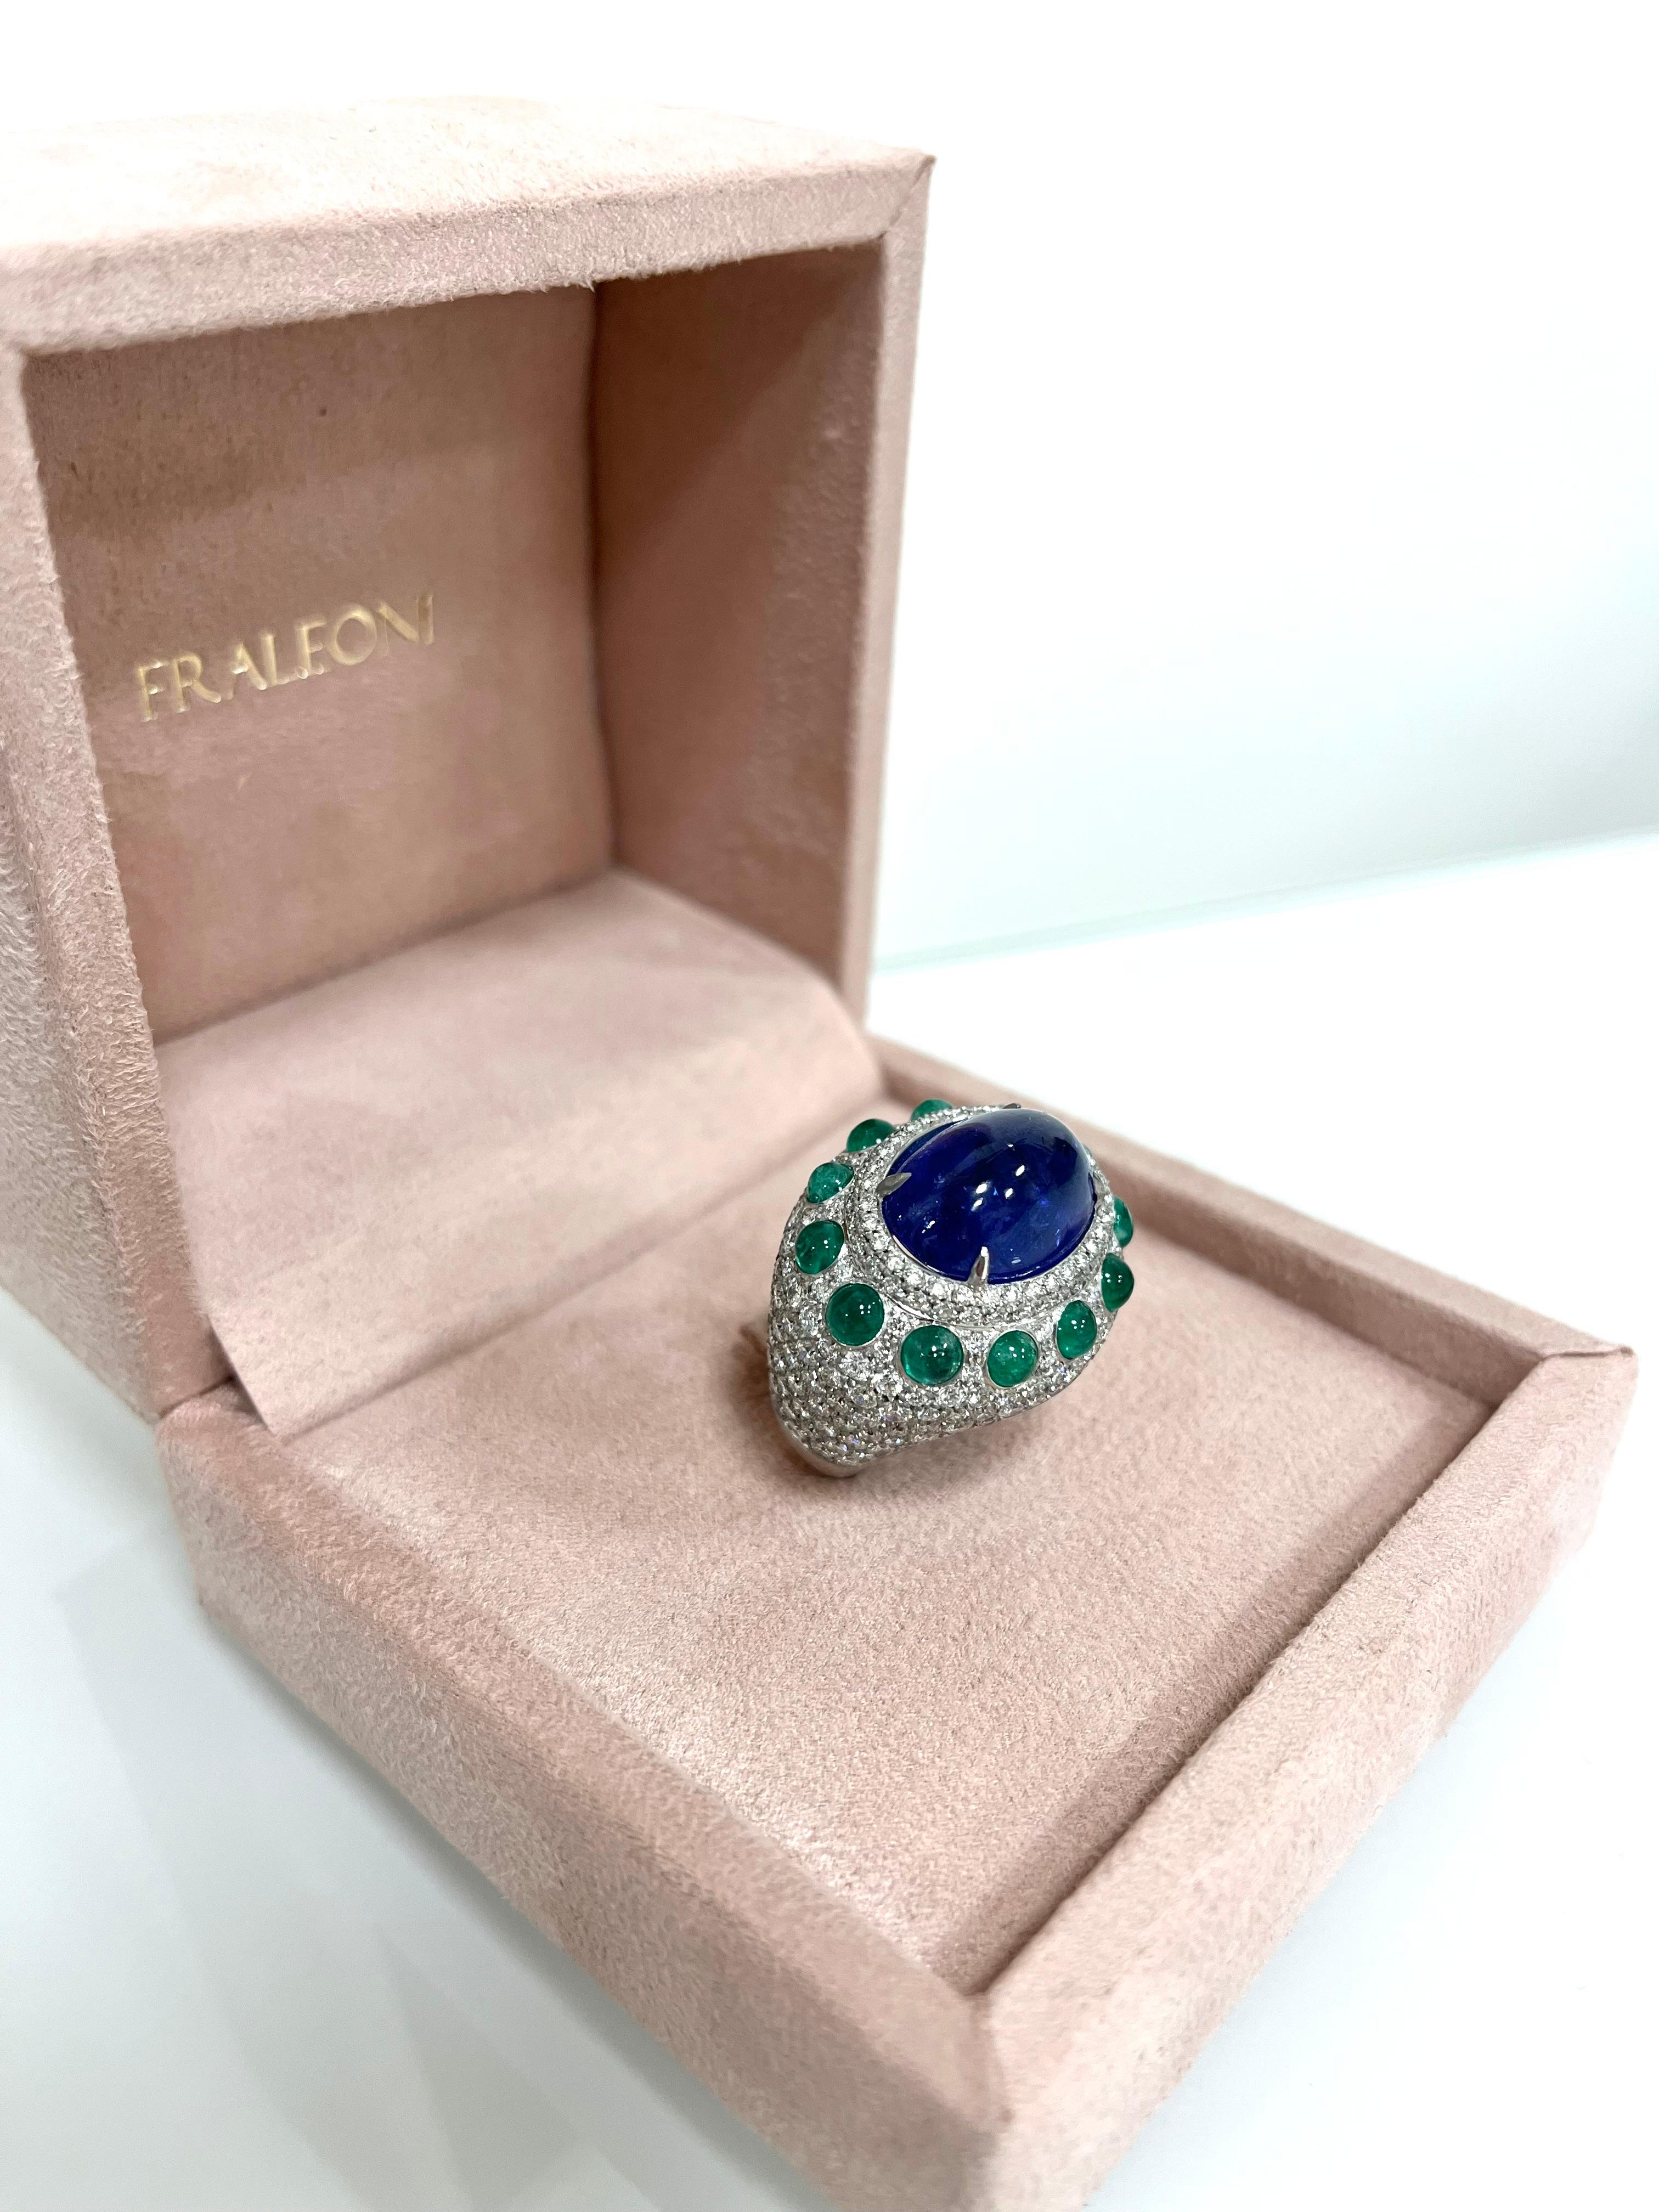 Fraleoni 18 Kt. White Gold Diamonds Emerald Tanzanite Cocktail Ring For Sale 4